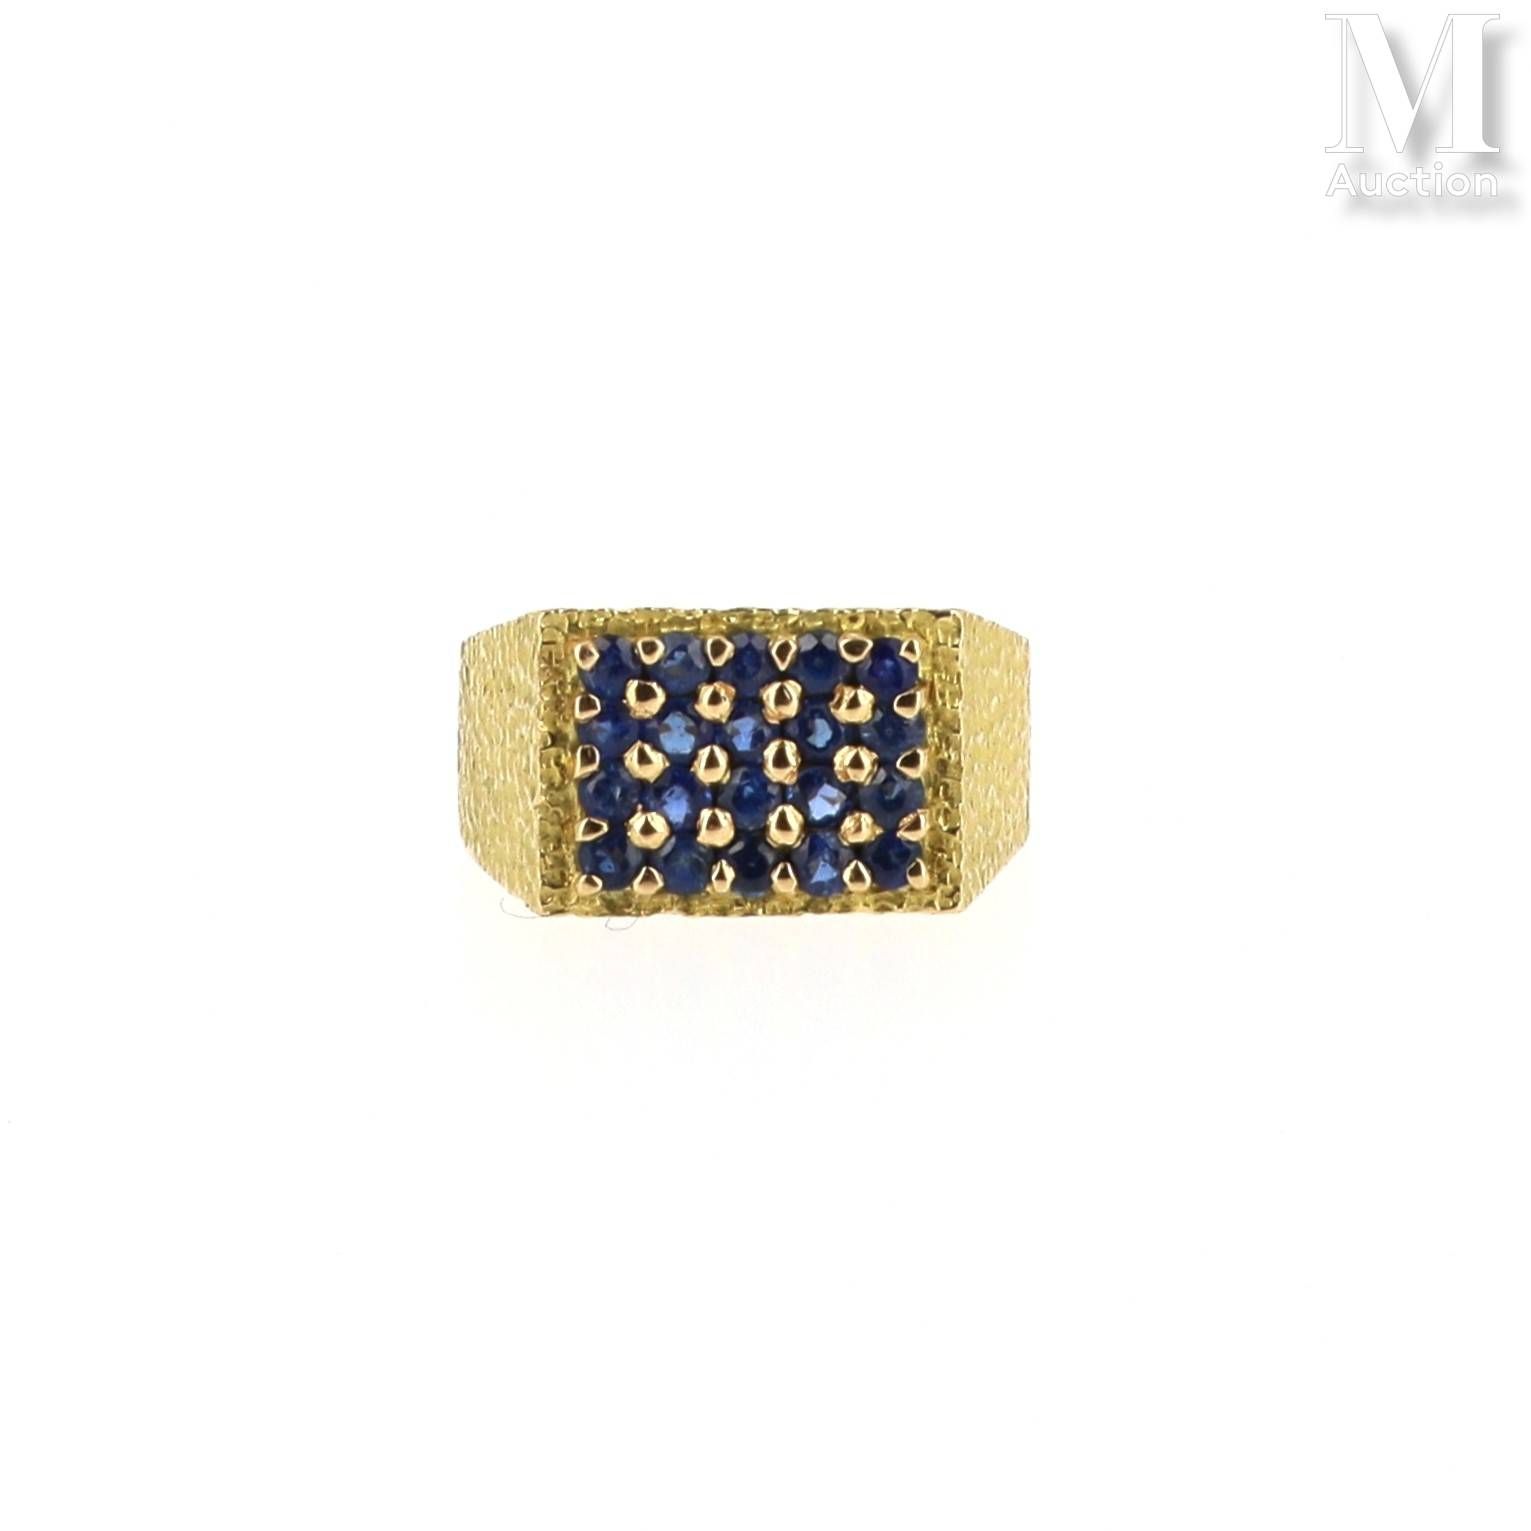 Bague saphirs 18K （750°/°°）黄金戒指，镶嵌众多小蓝宝石，形成一个长方形，黄金底座部分有纹理。
总重：6.6 克。
总重：6.6 克。
&hellip;